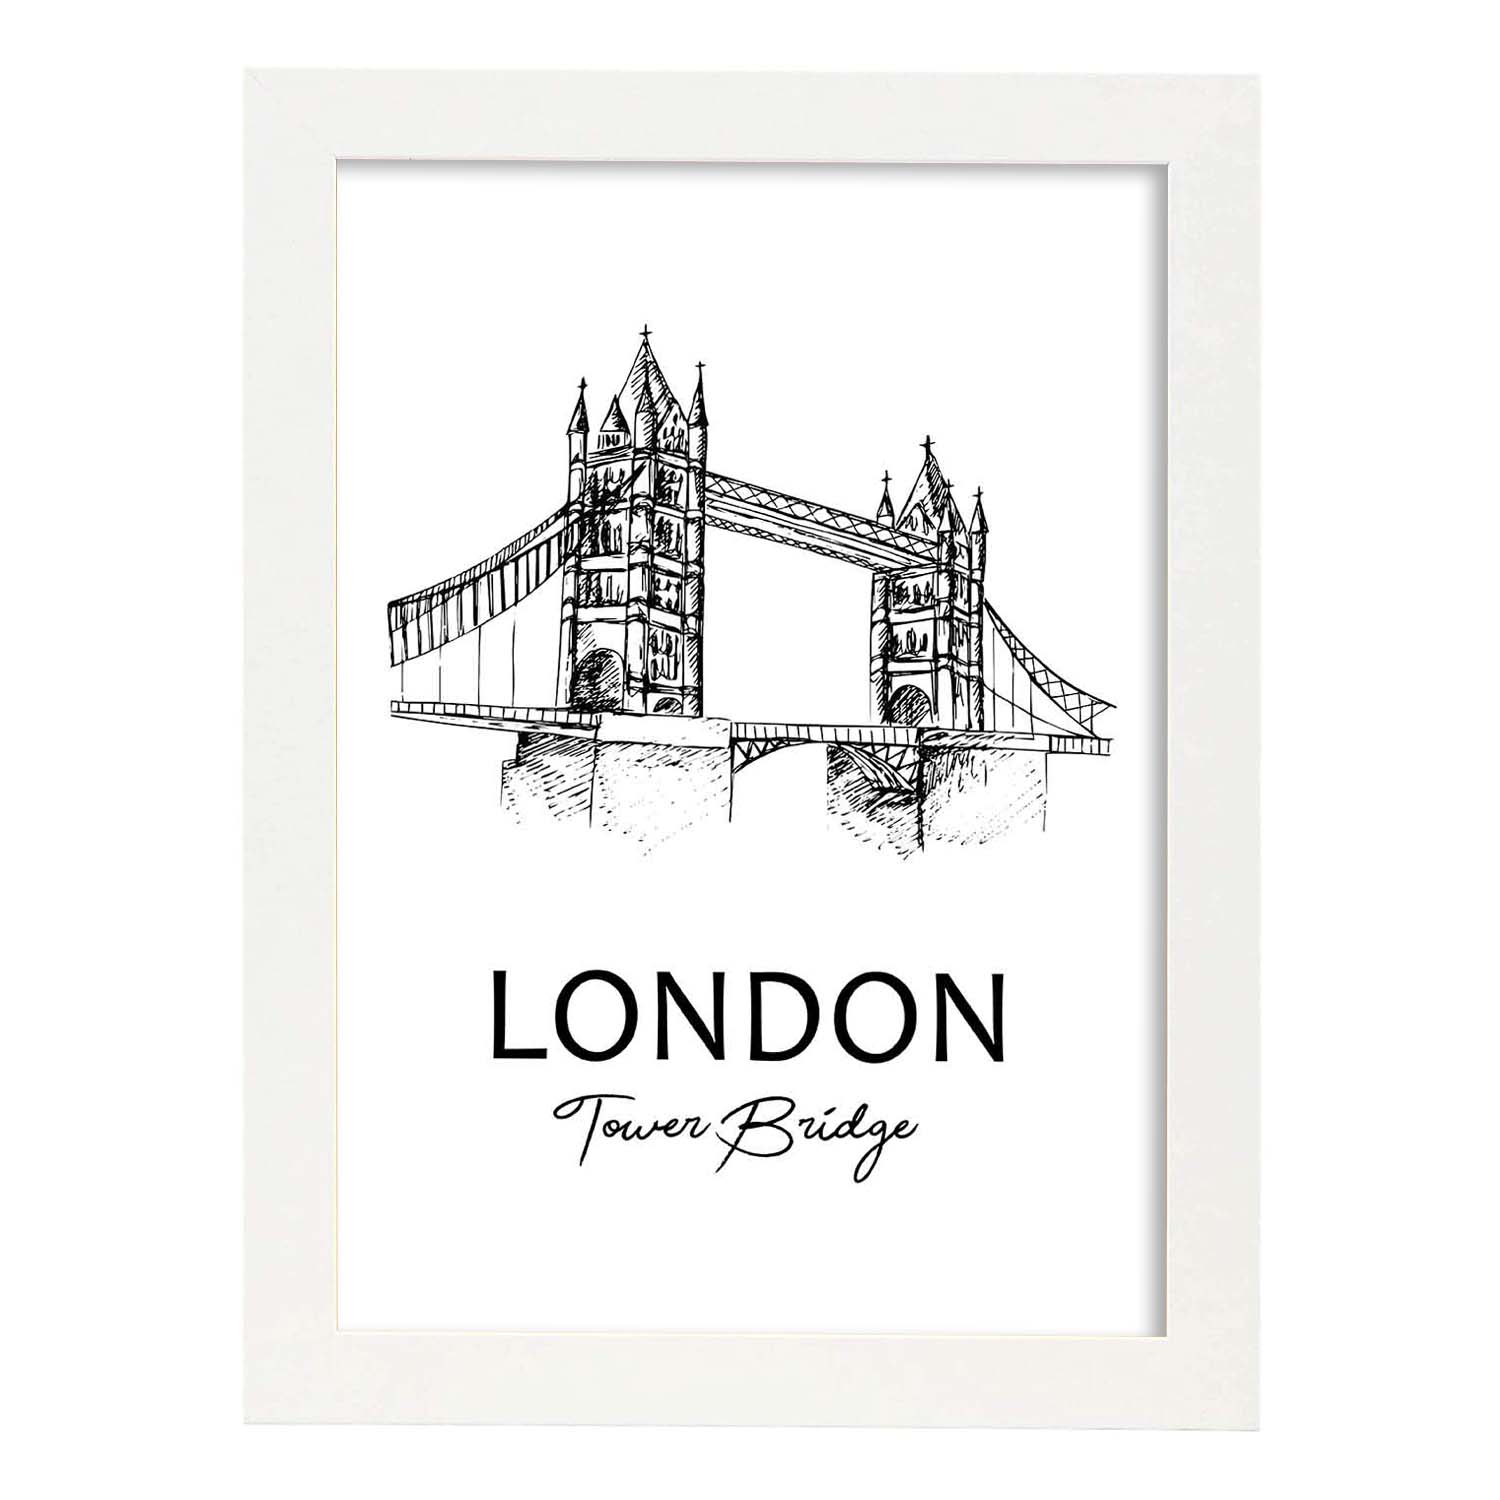 Poster de Londres - Tower bridge. Láminas con monumentos de ciudades.-Artwork-Nacnic-A4-Marco Blanco-Nacnic Estudio SL